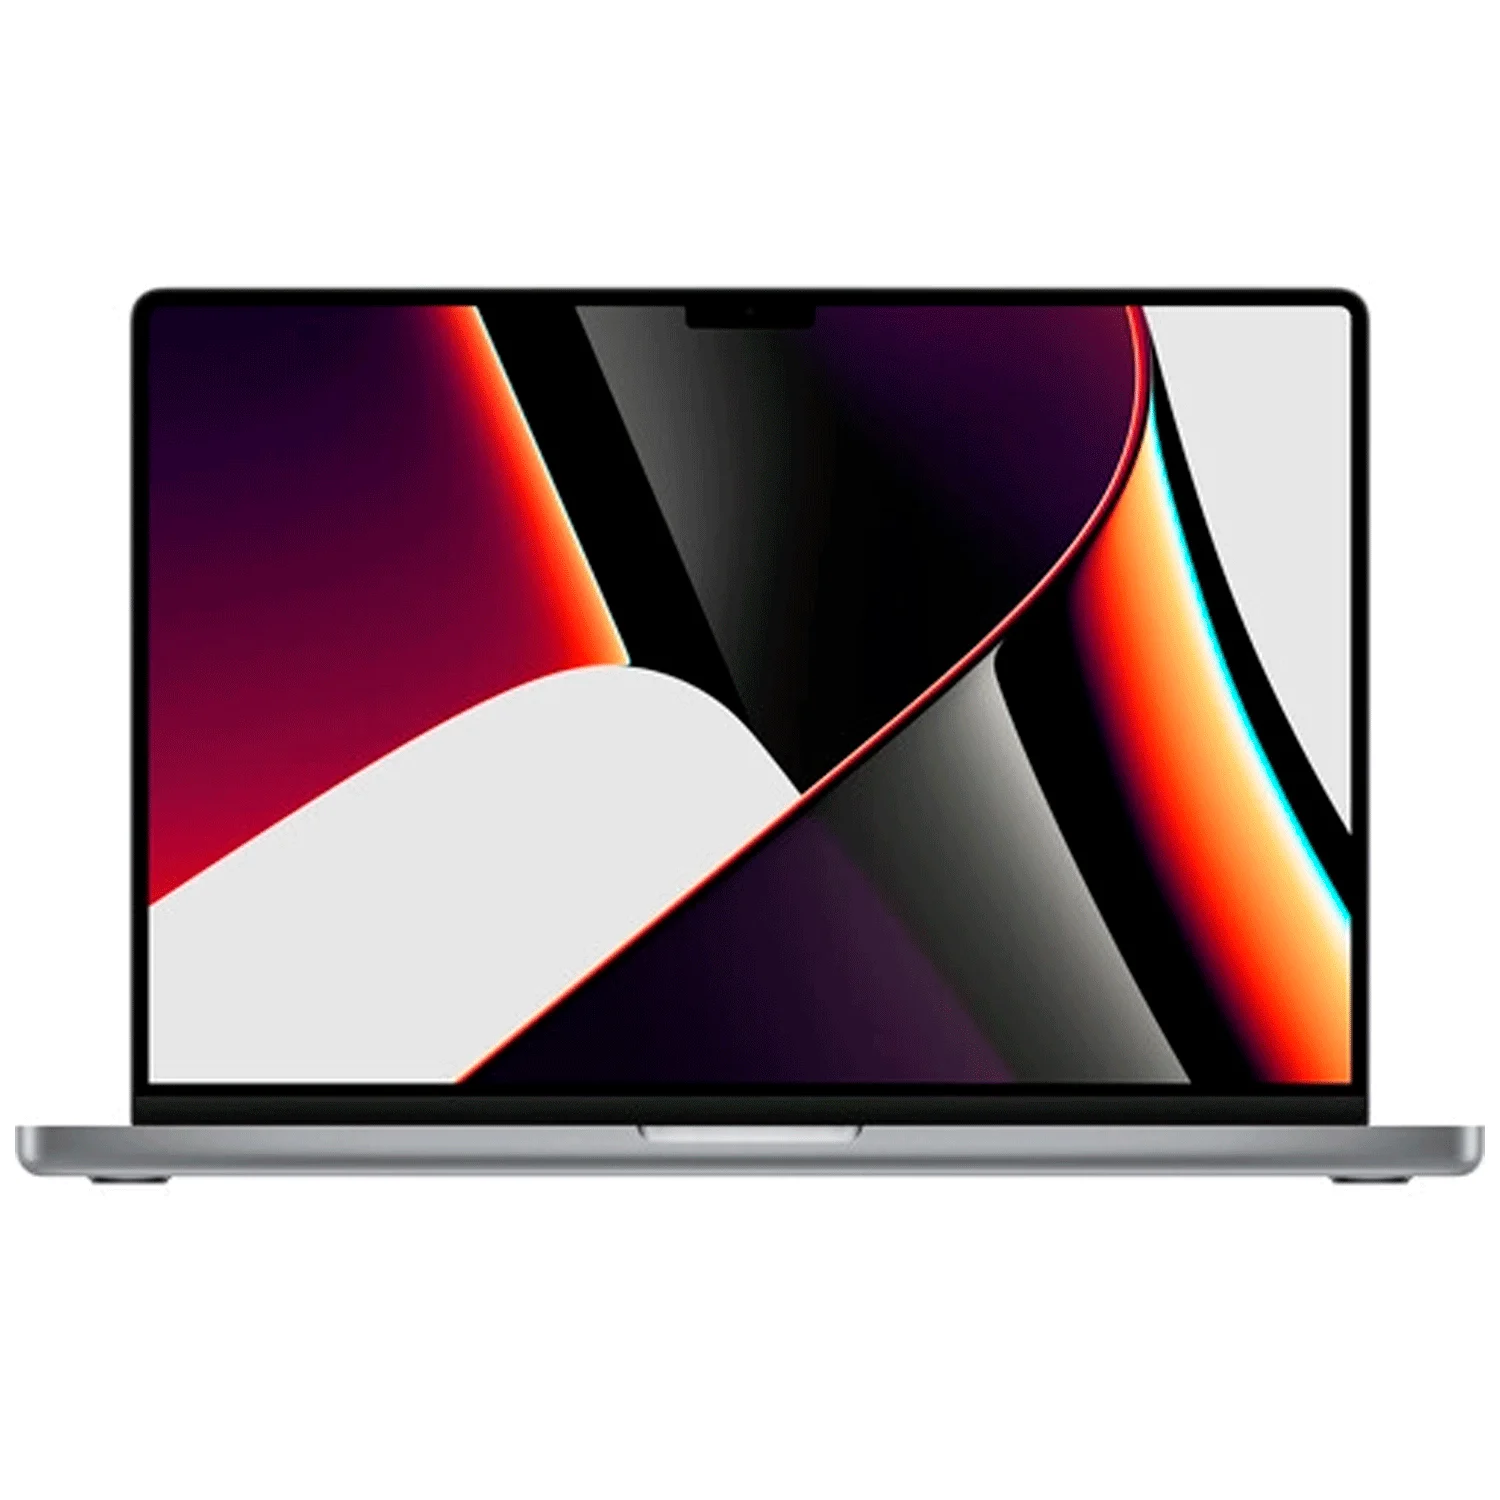 Apple MacBook Pro M1 MK183LL/A 512GB / 16GB RAM / Tela 16.2" - Cinza Espacial (2021)